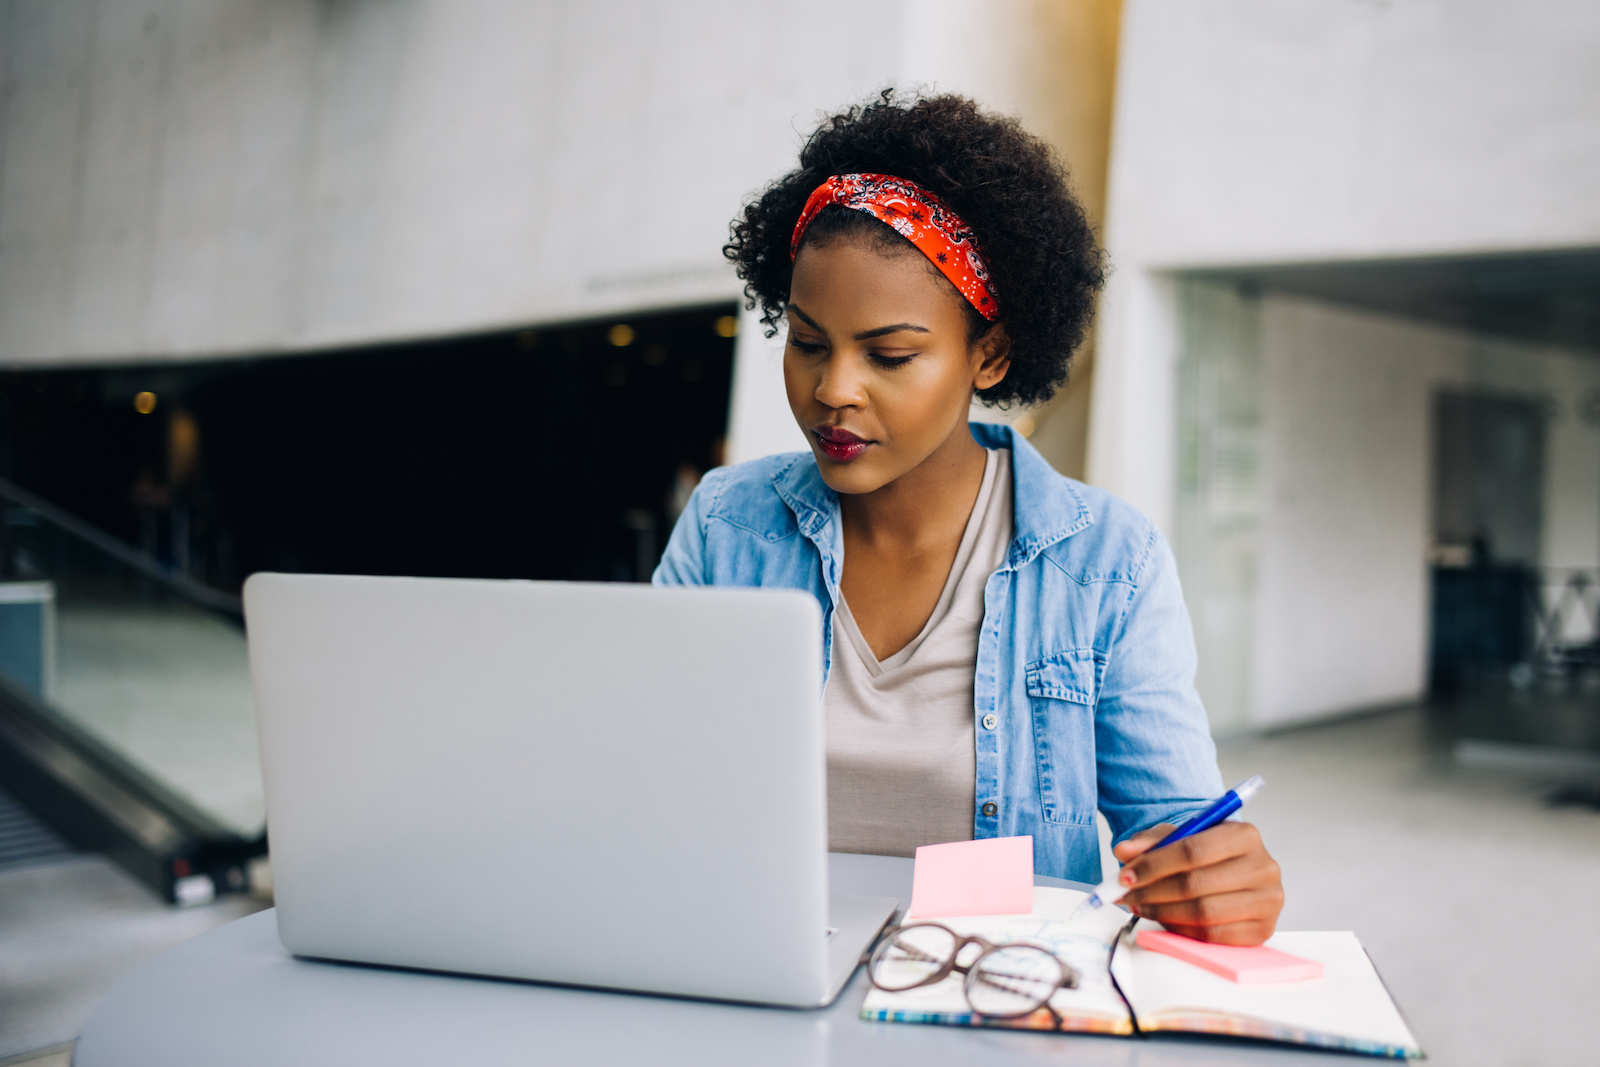 Oracle internship: woman using a laptop